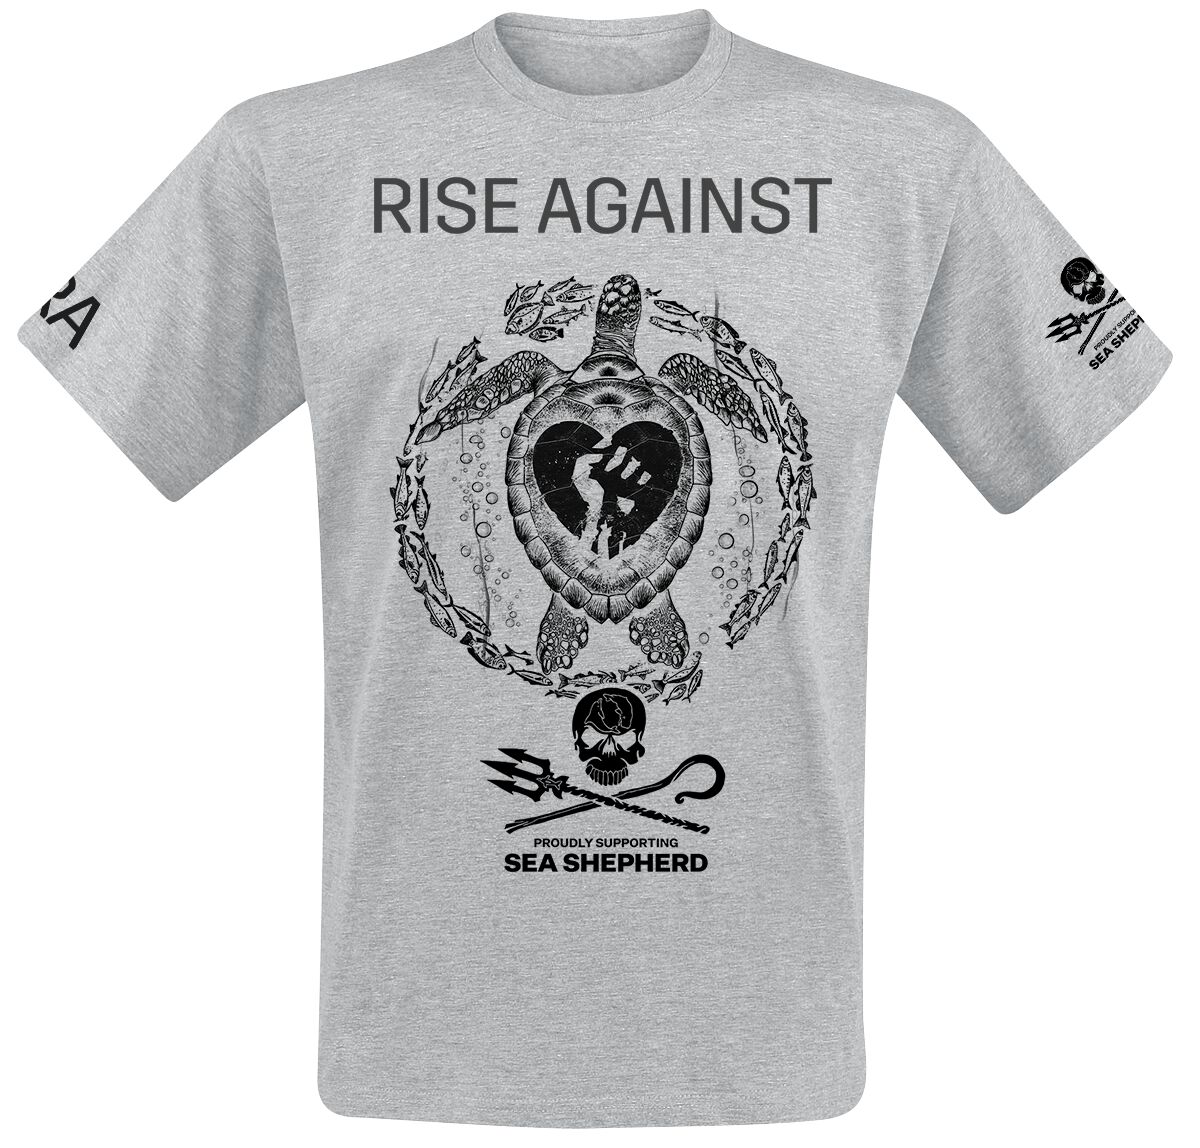 Rise Against T-Shirt - Sea Shepherd Cooperation - Our Precious Time Is Running Out - S bis 3XL - für Männer - Größe S - grau meliert  - EMP exklusives